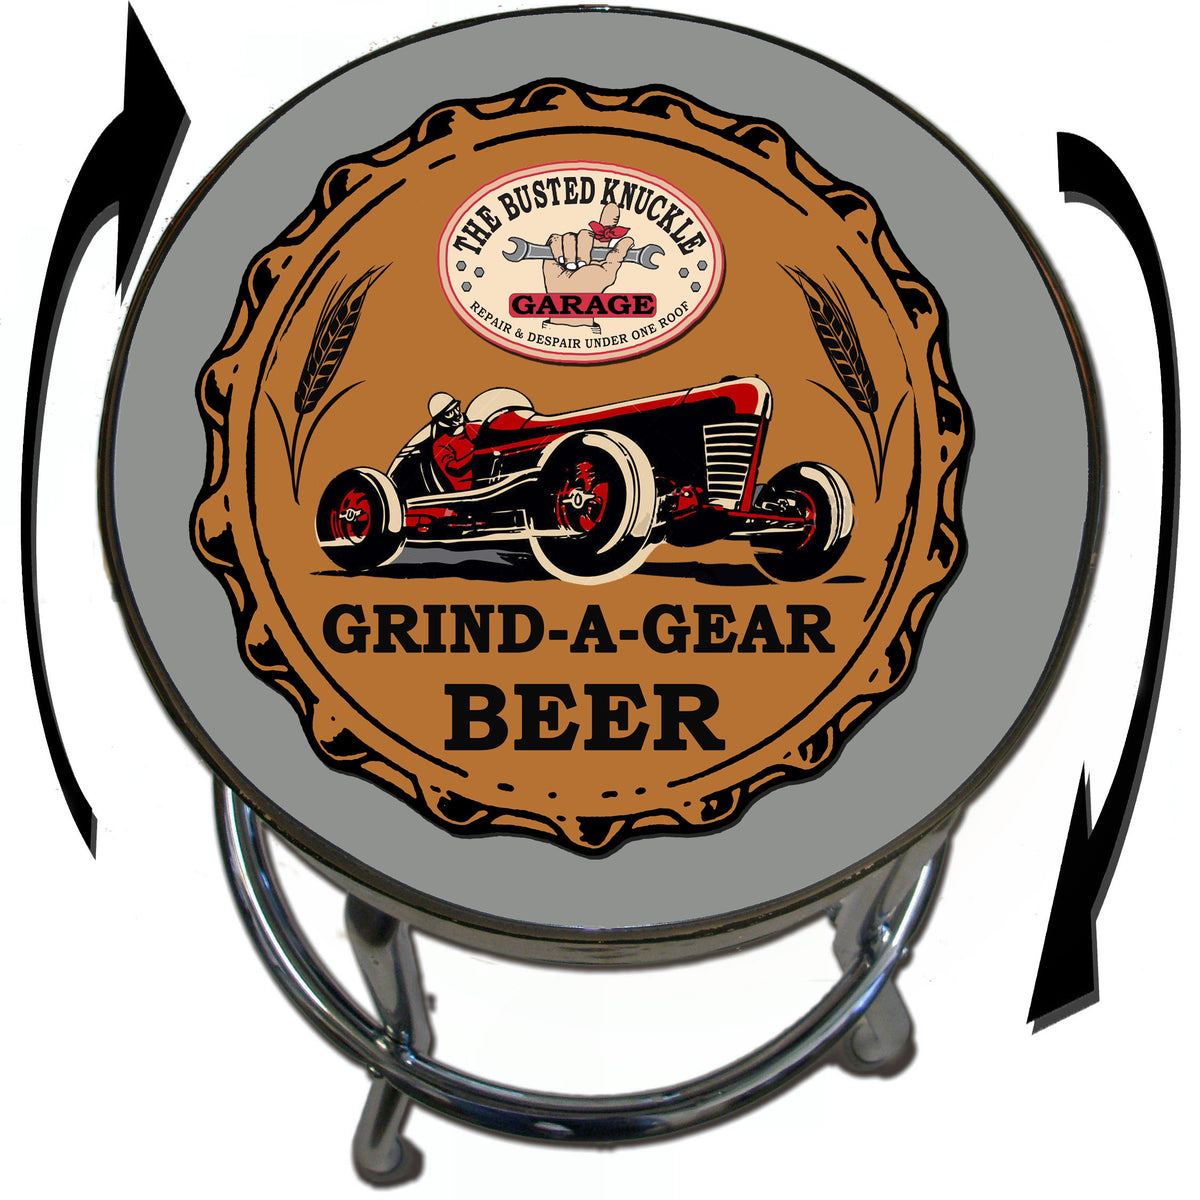 Busted Knuckle Garage Grind-A-Gear Beer Shop Stool